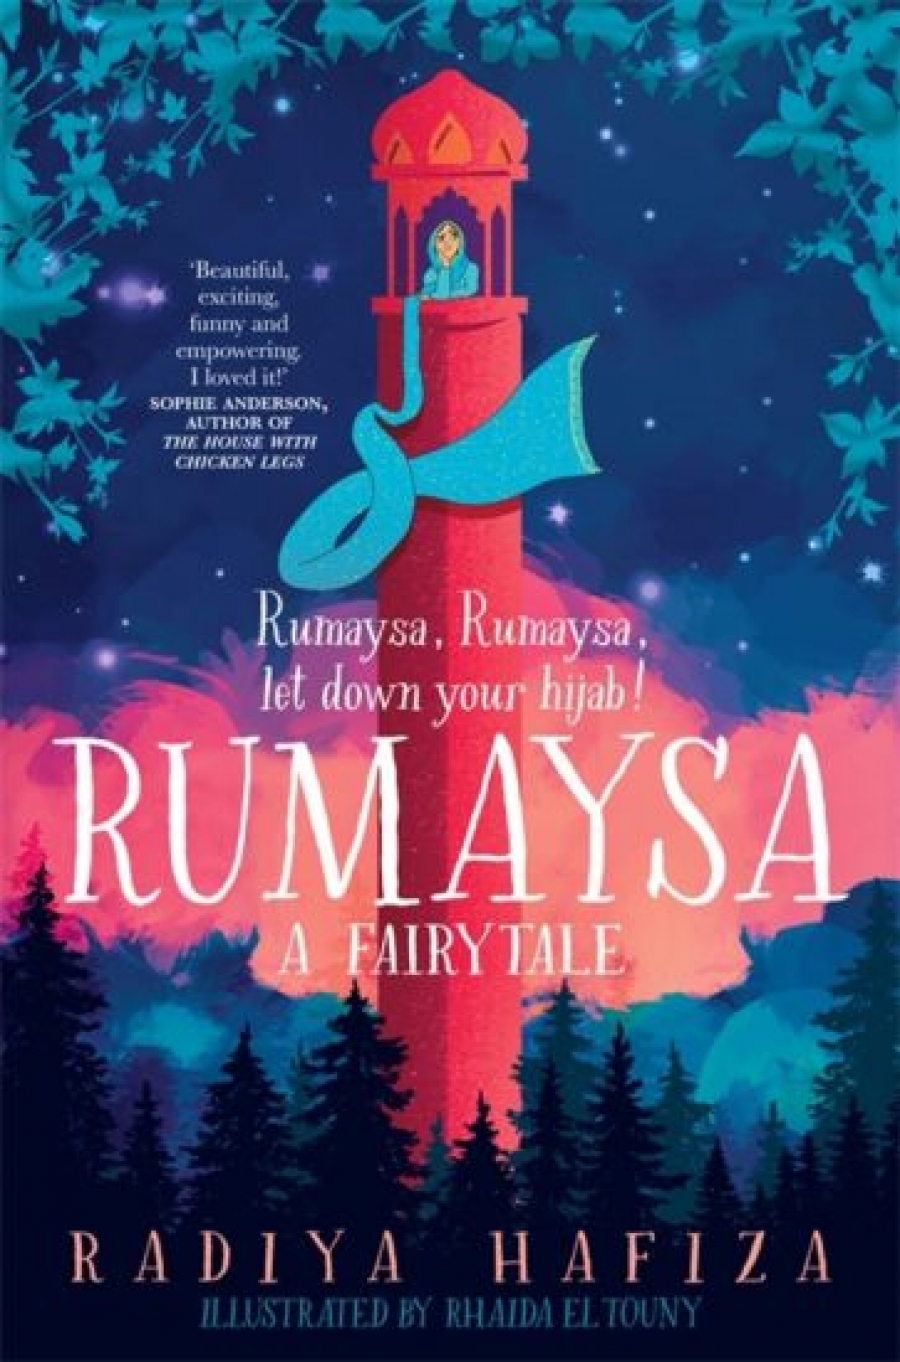 Hafiza Radiya Rumaysa. A Fairytale 